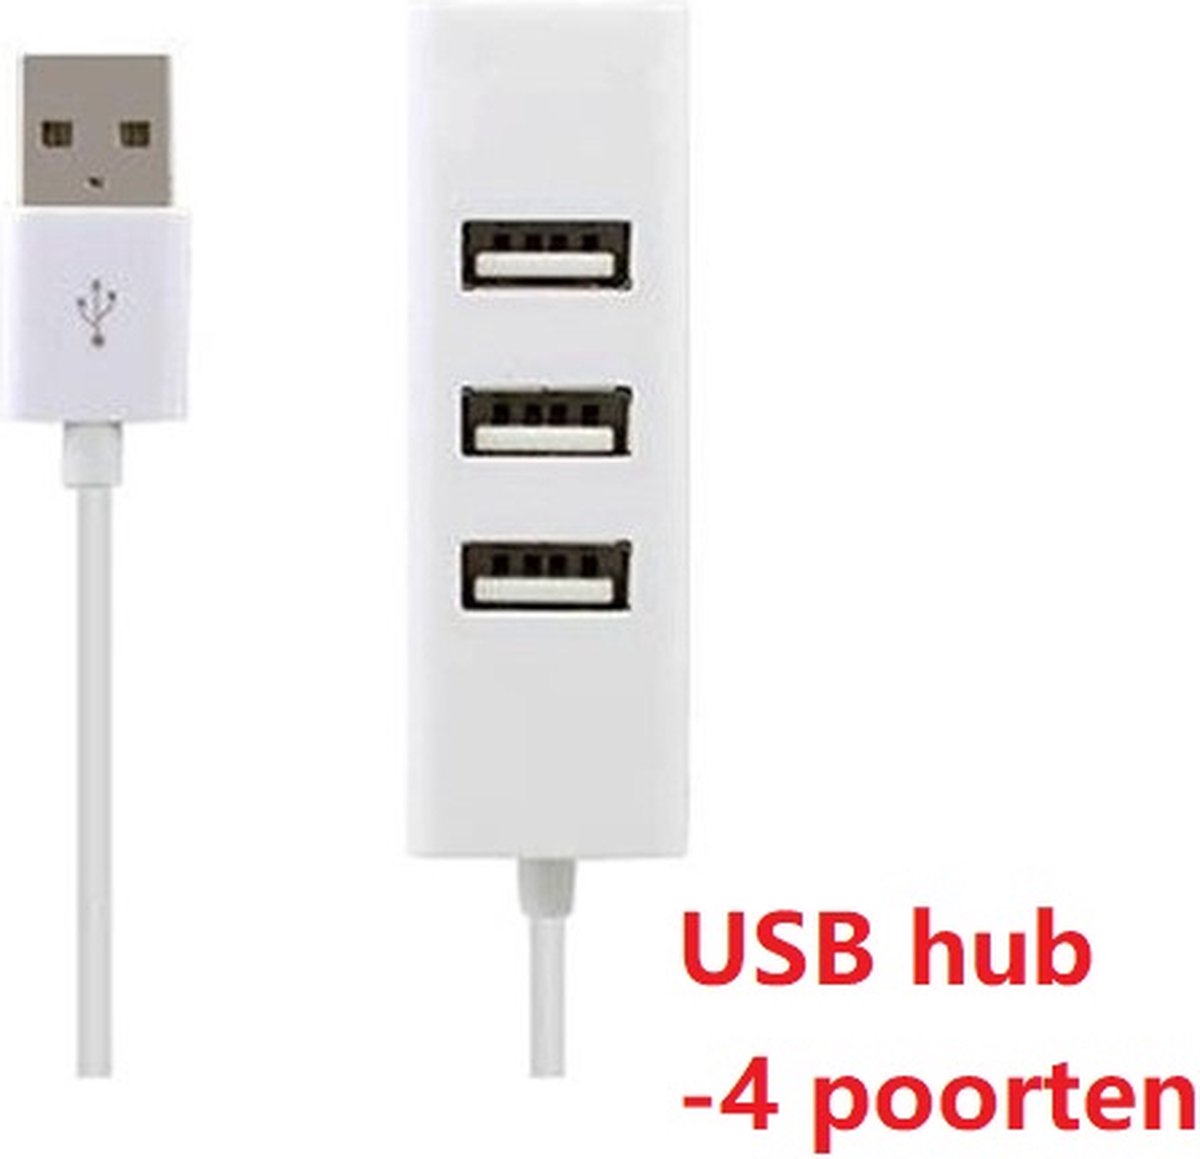 USB hub - splitter - switch - 4 poorten - met kabel - verlengkabel - computer accessoires - wit-kabellengte:15 cm